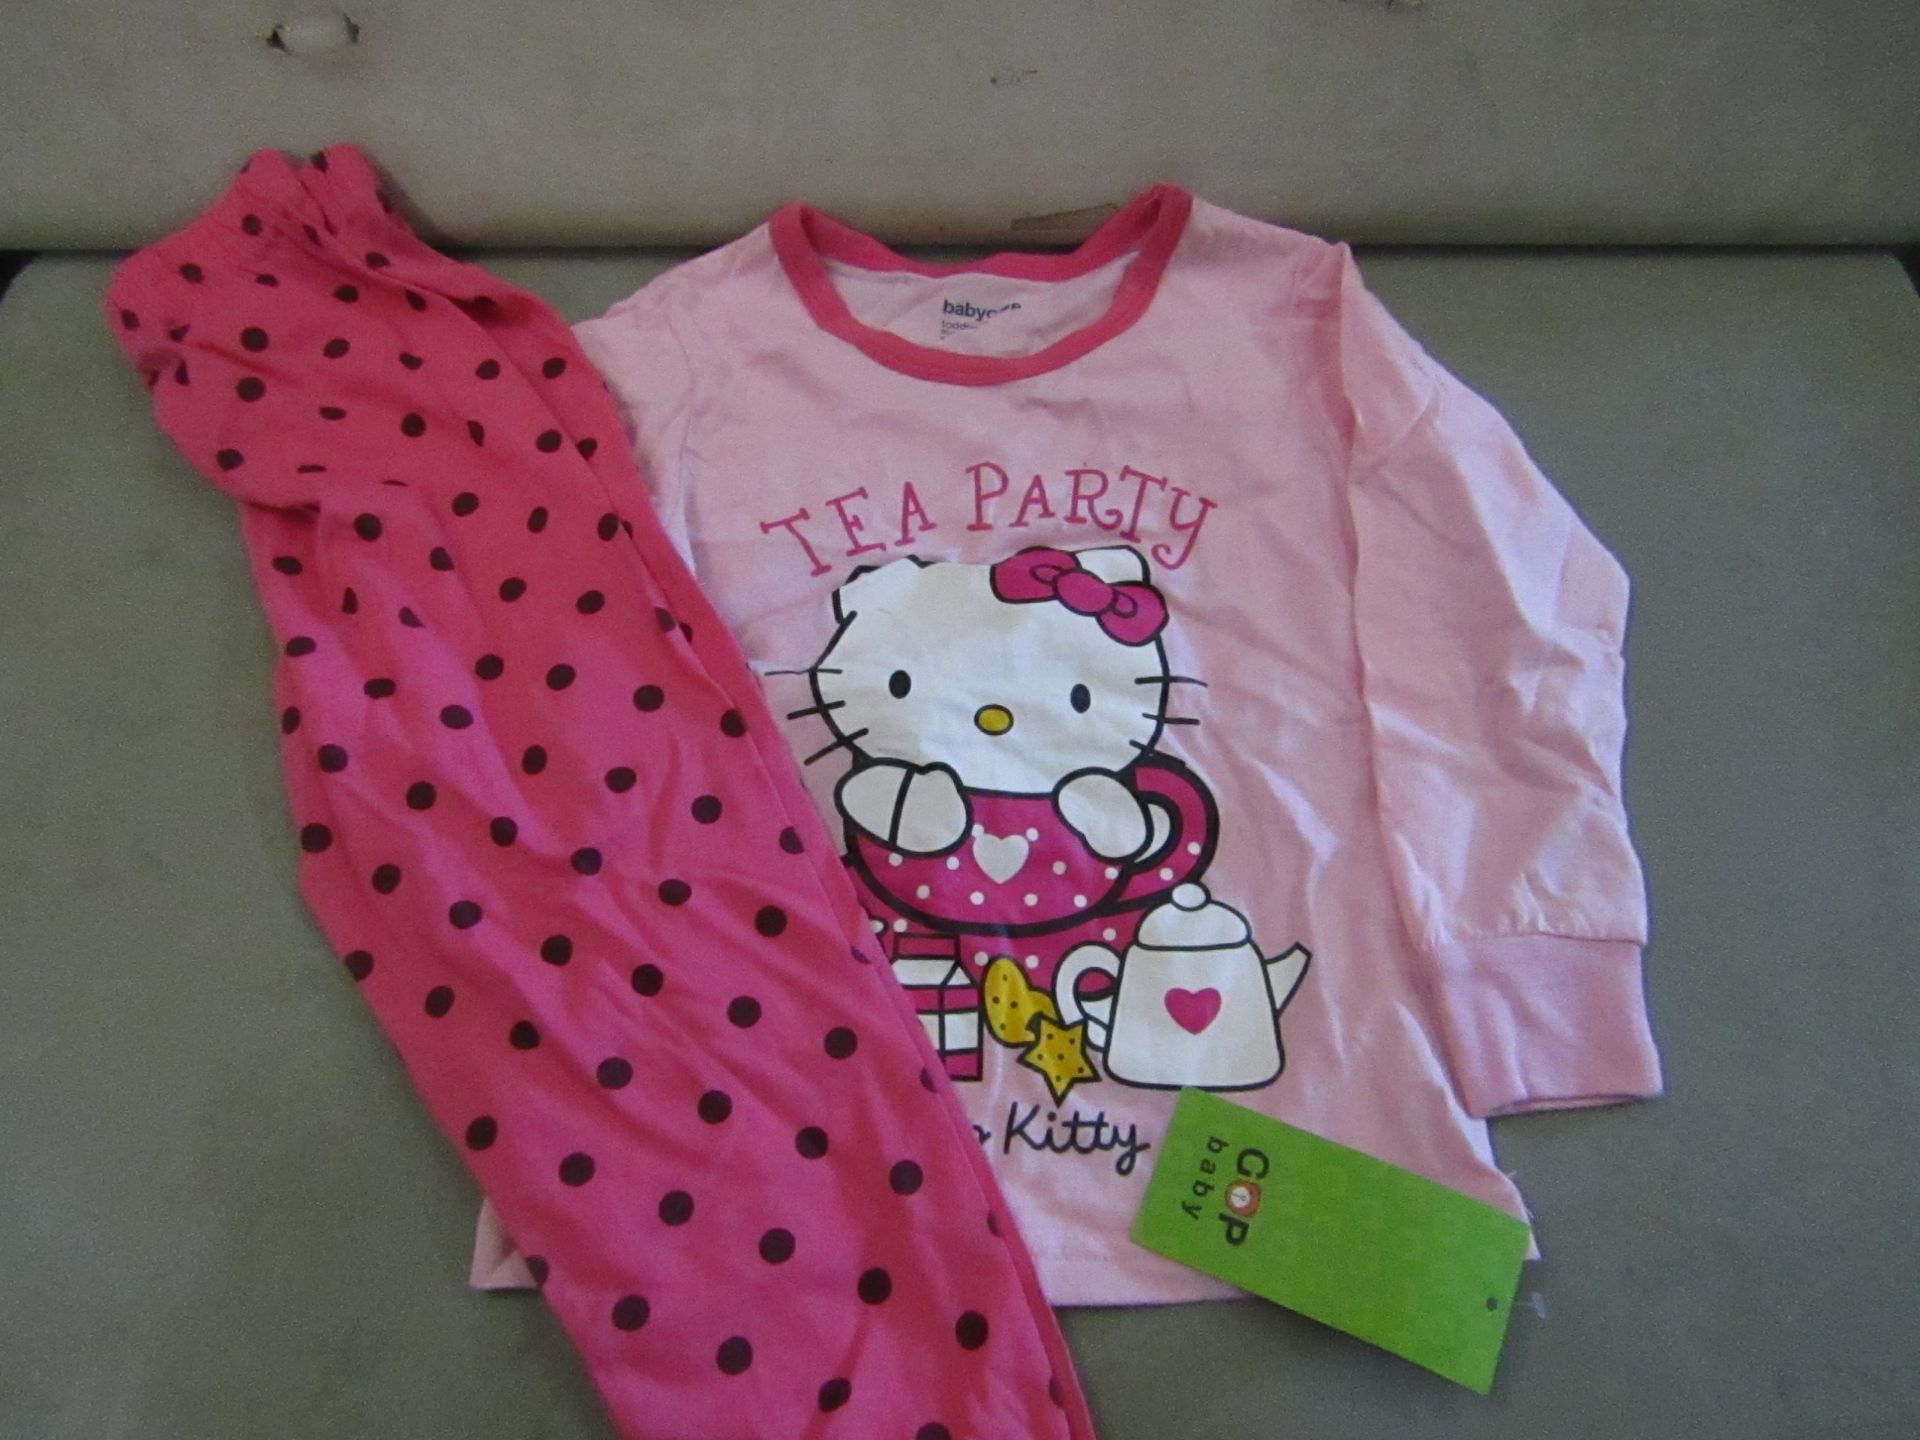 2 X Pairs of Baby Gap Girls Pyjamas Aged 5yrs New & Packaged